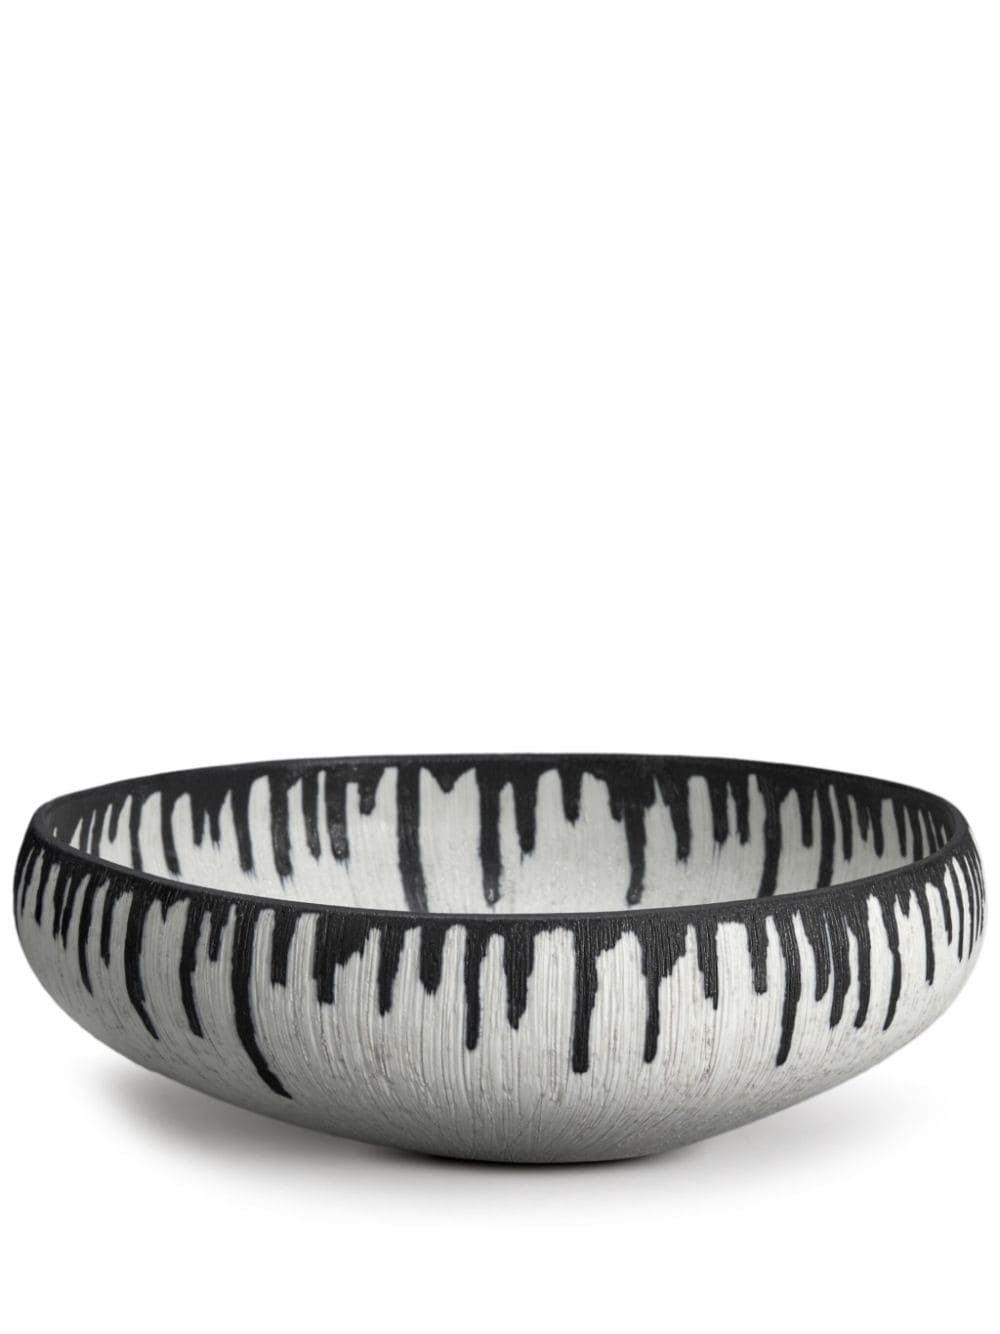 L'Objet medium Tokasu porcelain bowl (25cm) - White